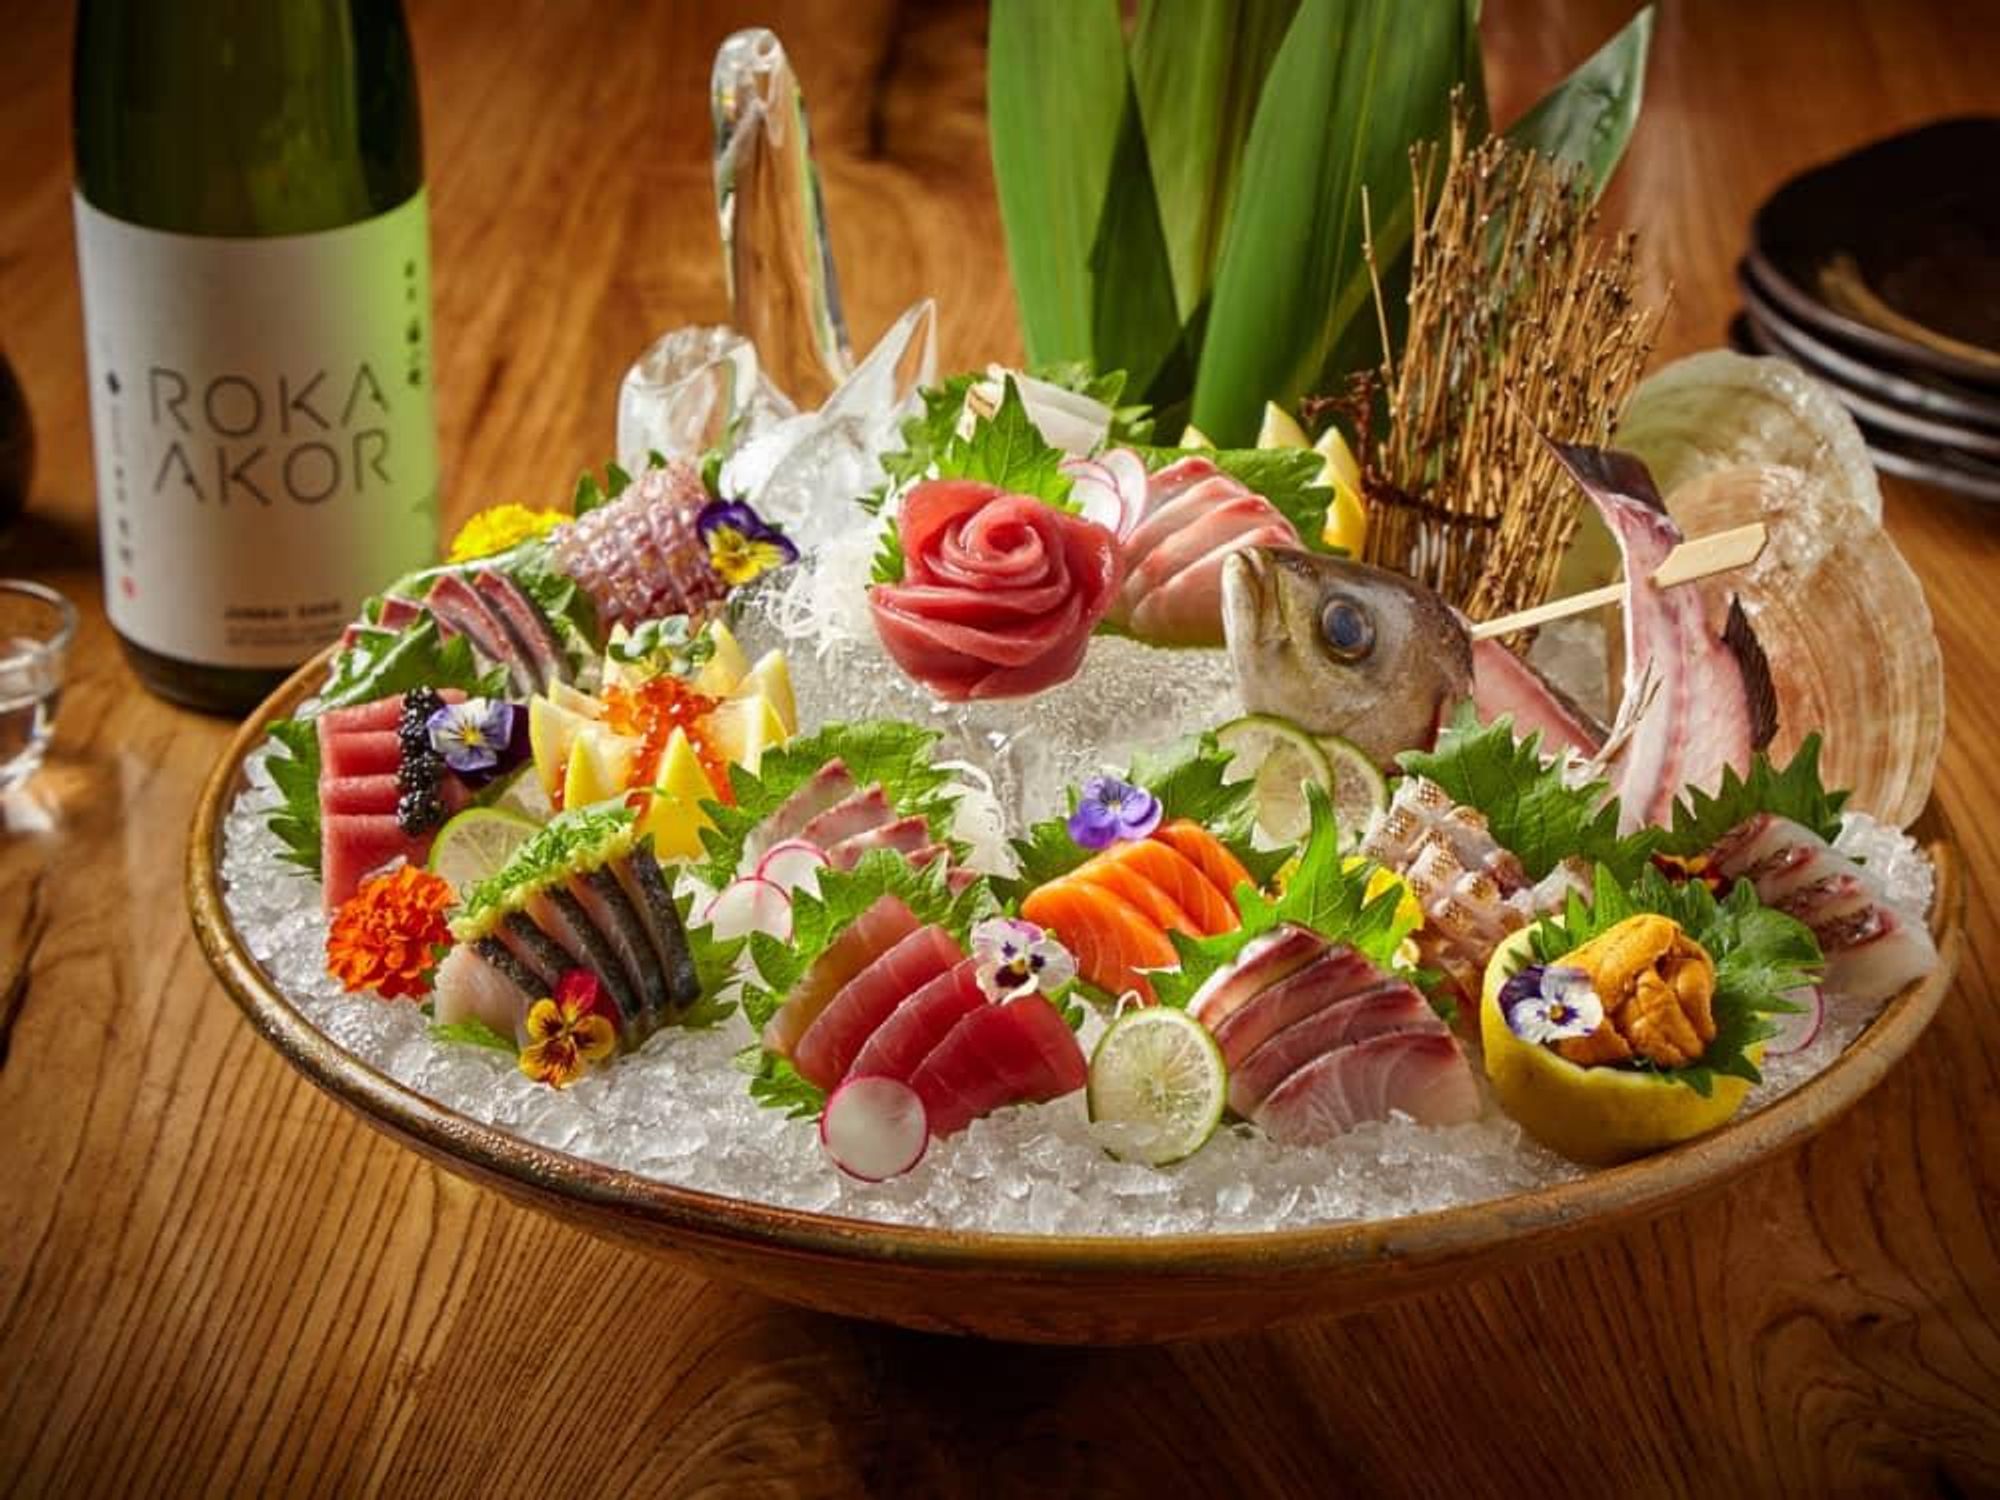 Roka Akor sashimi platter